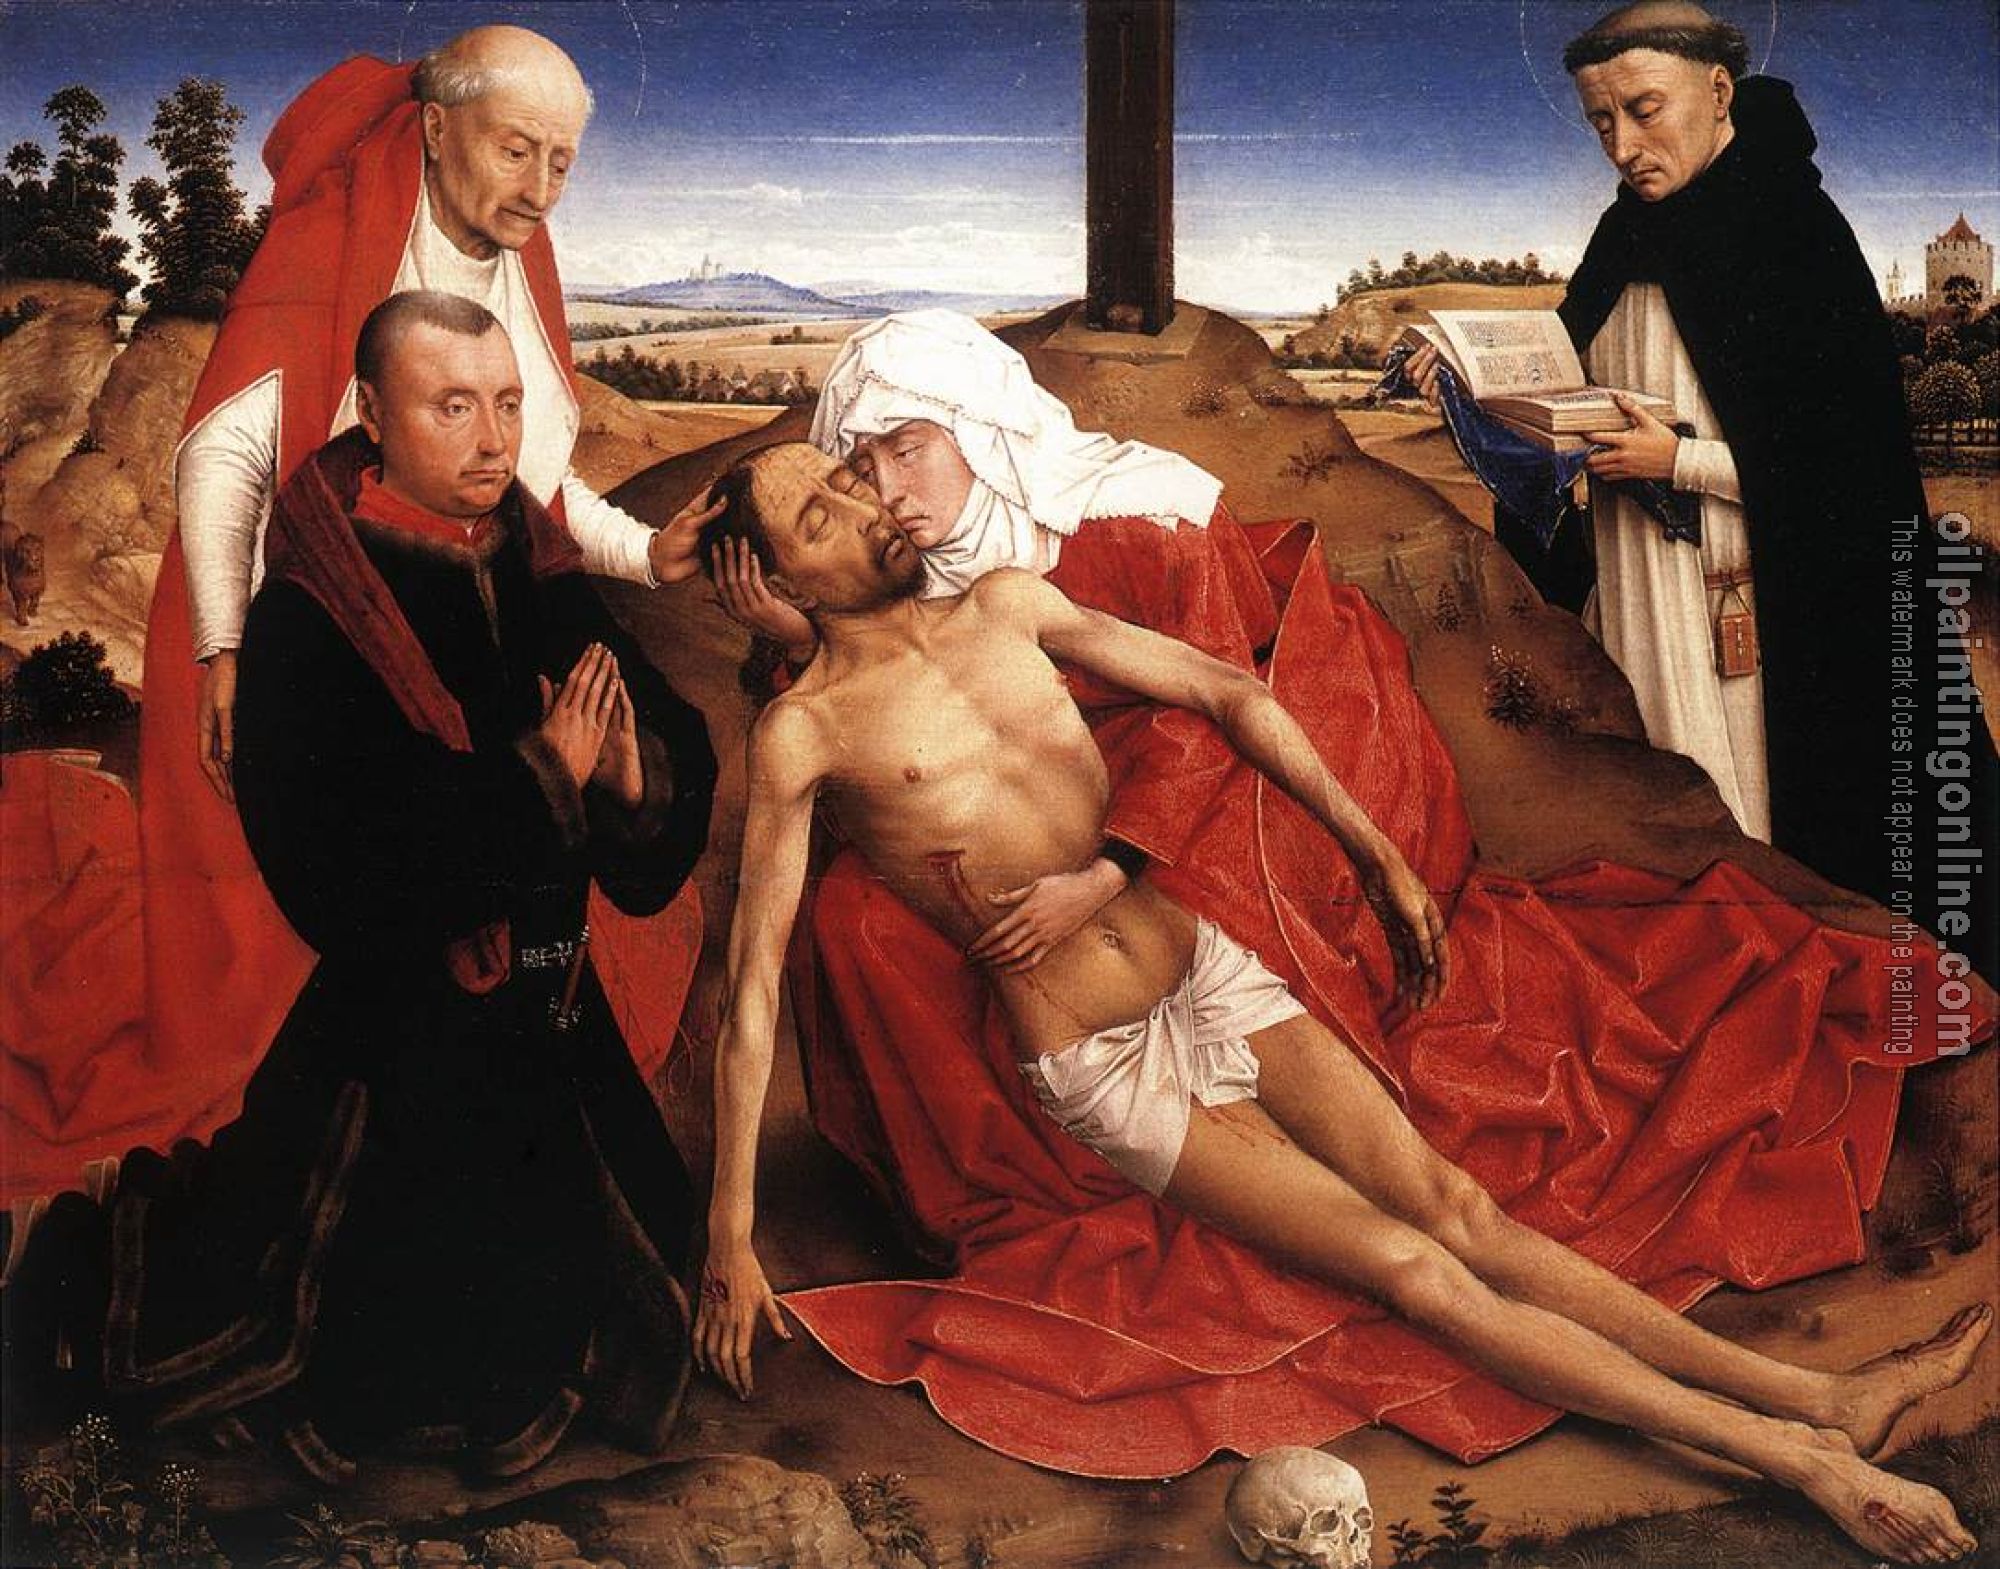 Weyden, Rogier van der - Lamentation 2